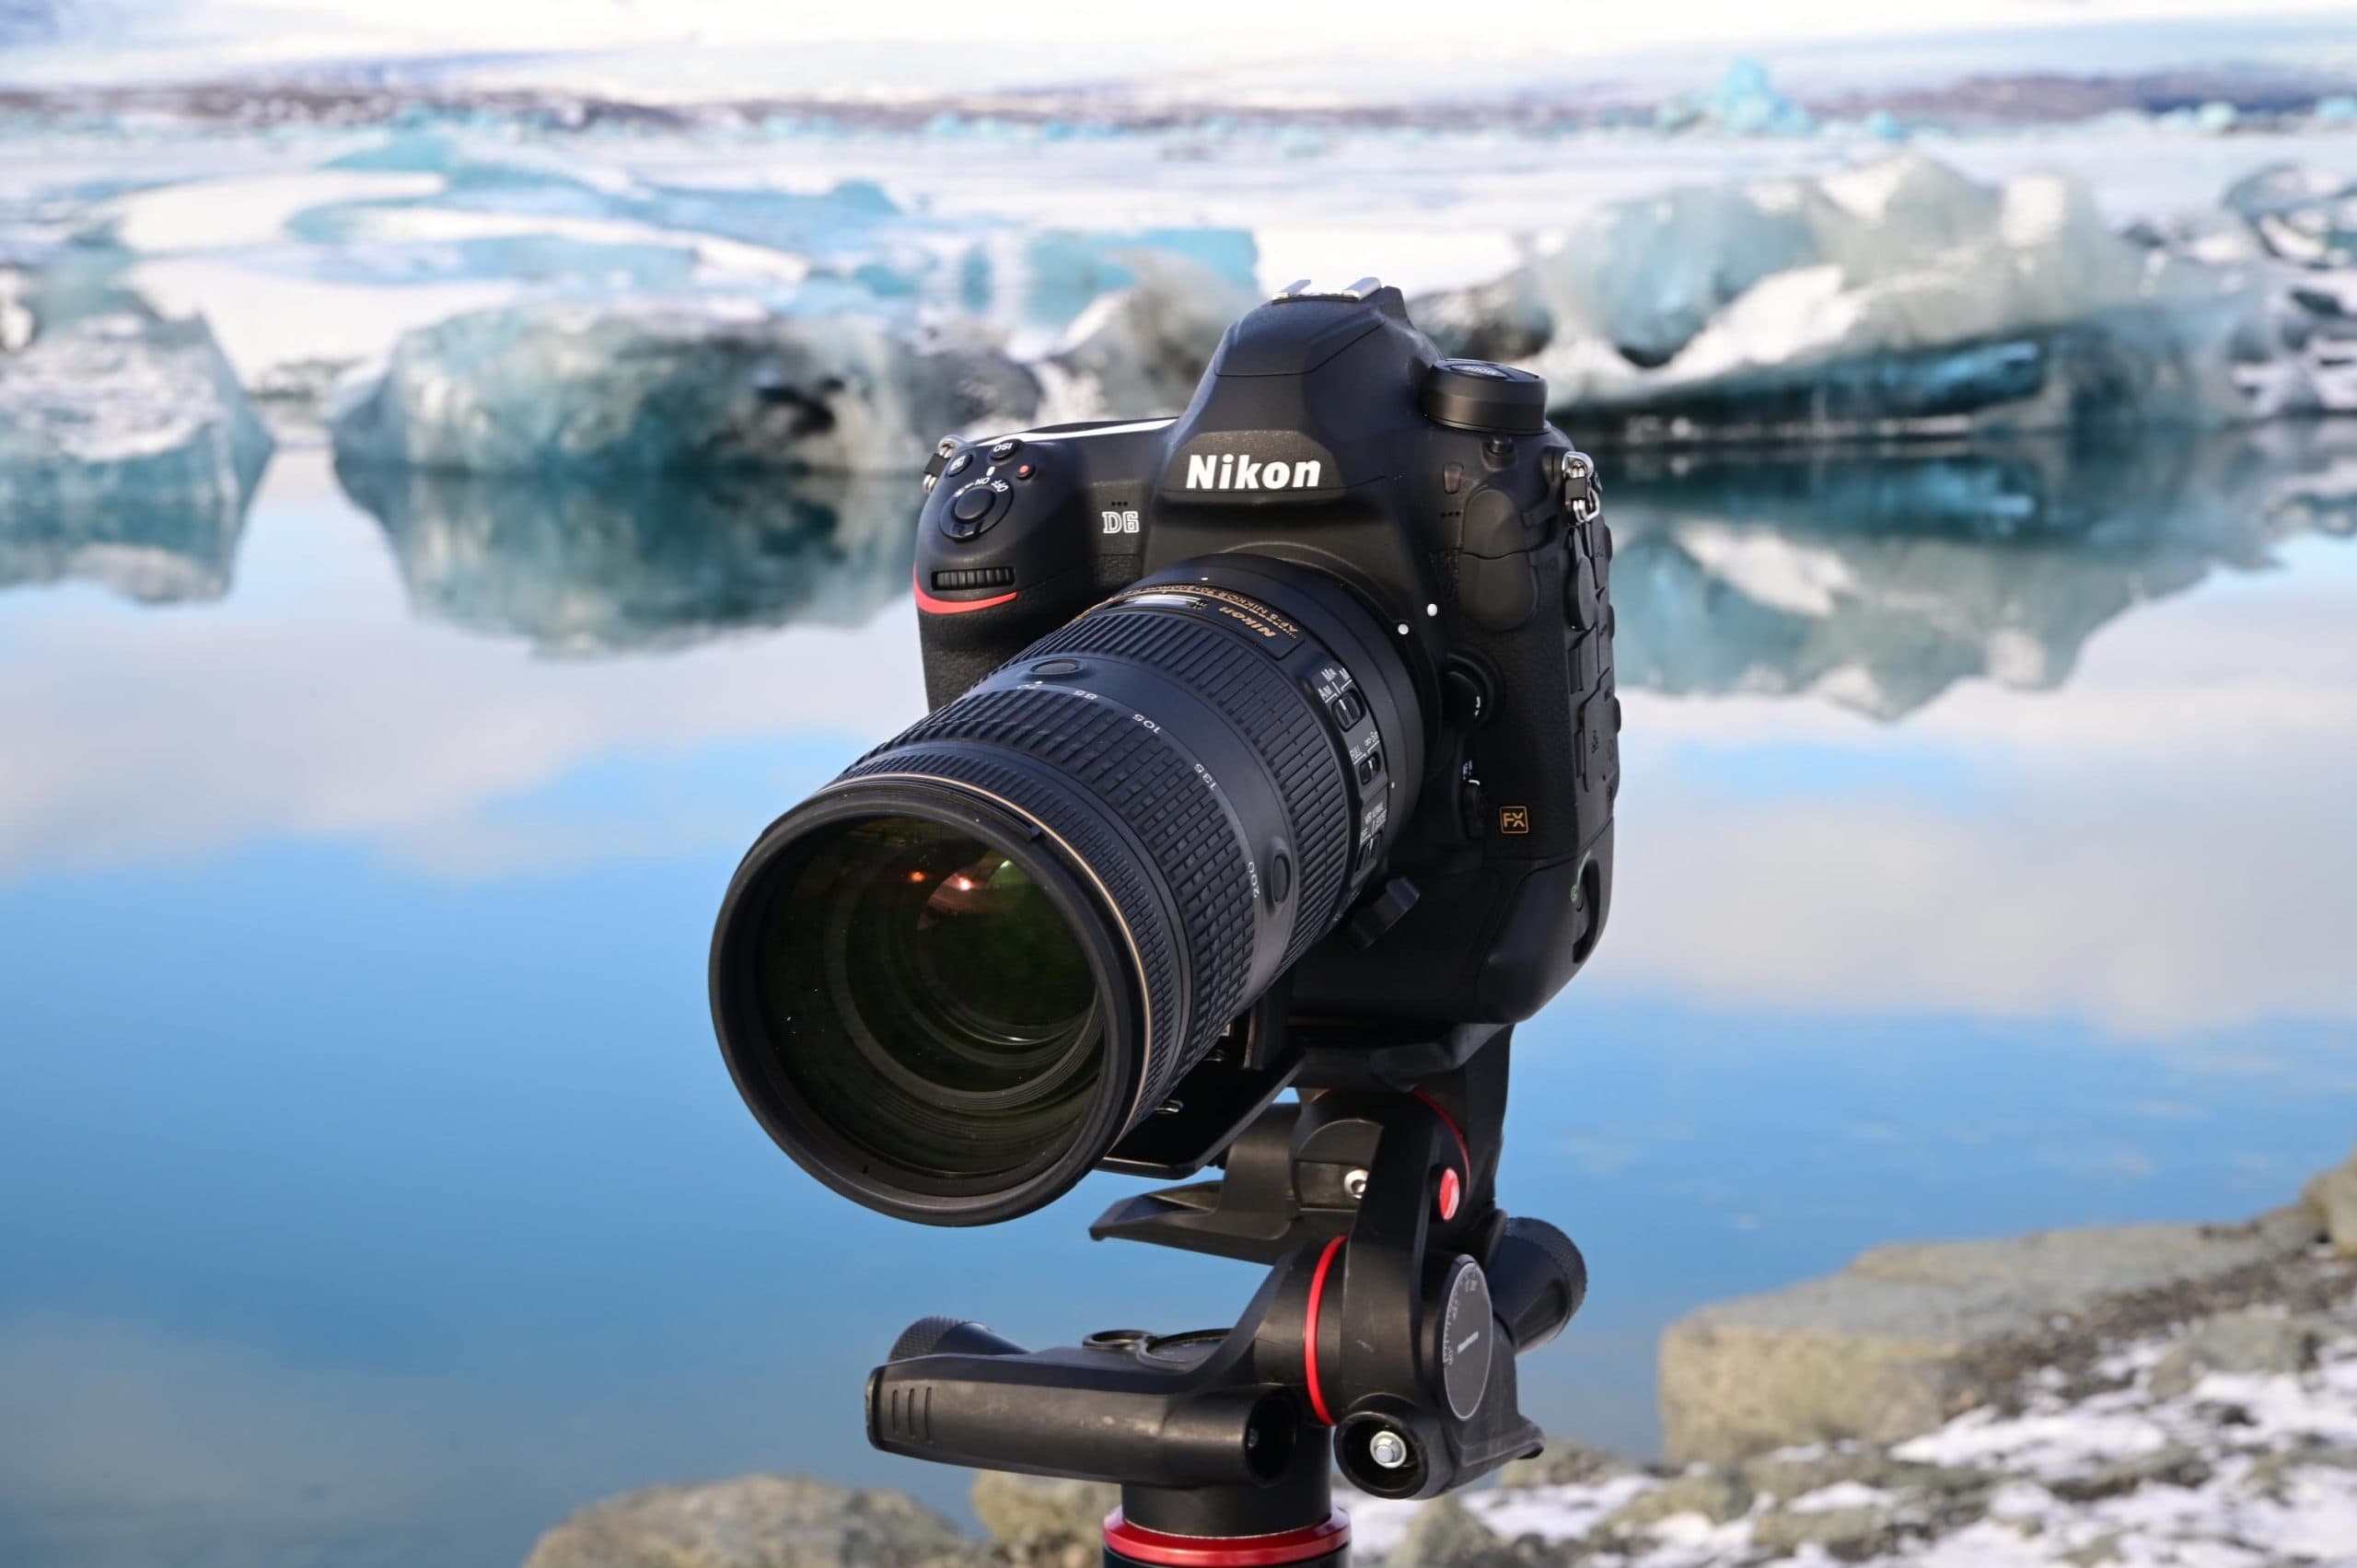 Nikon D5600 - an advanced DSLR camera for enthusiast photographers